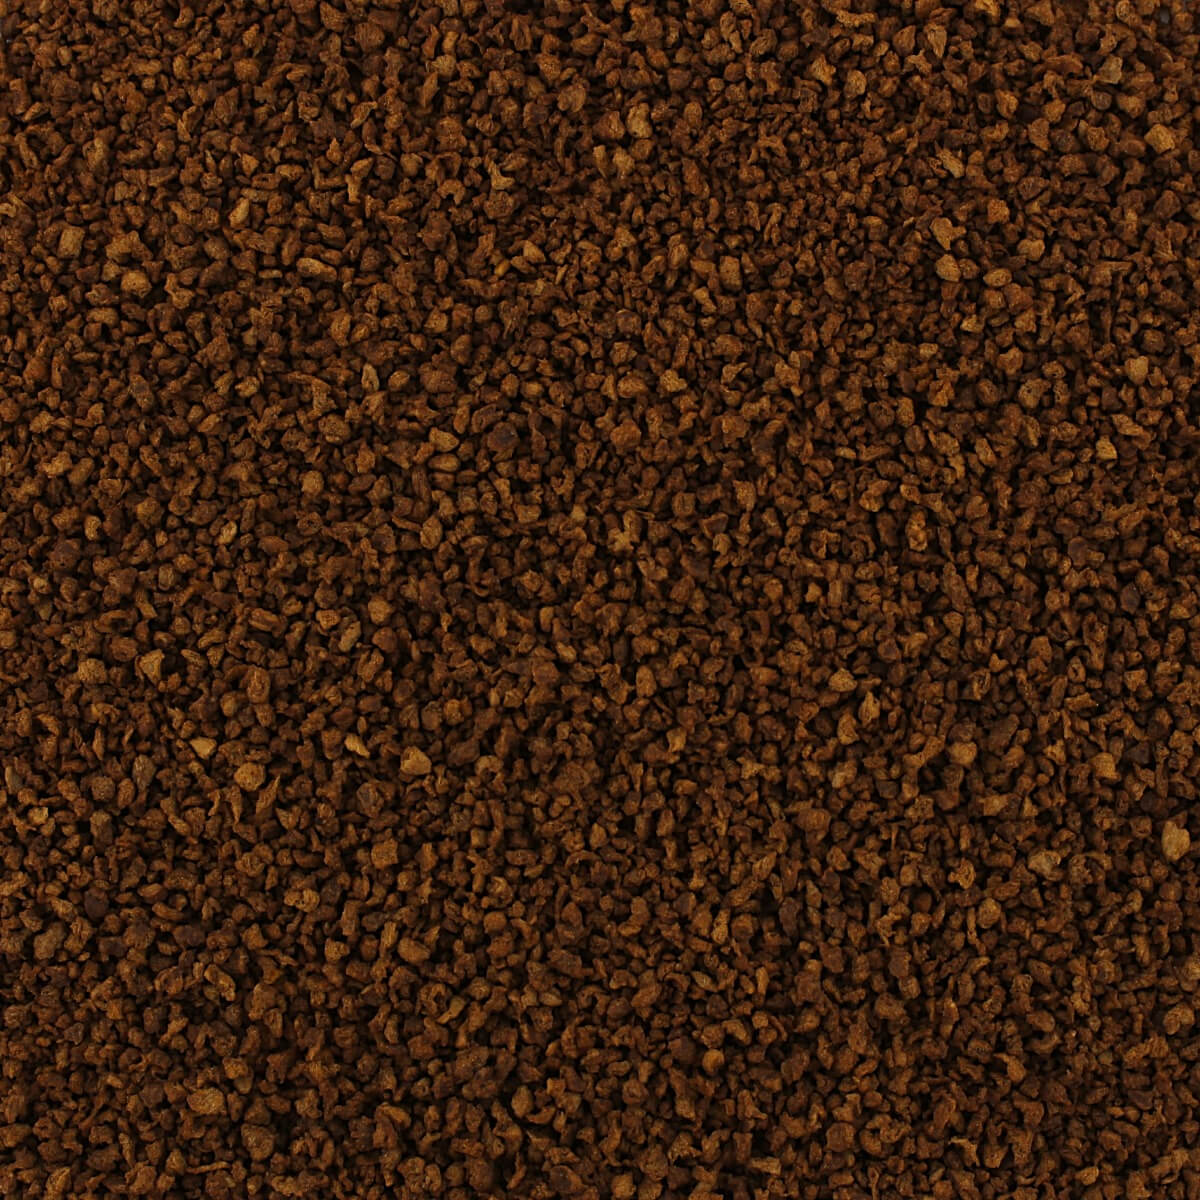 A brown sand texture.